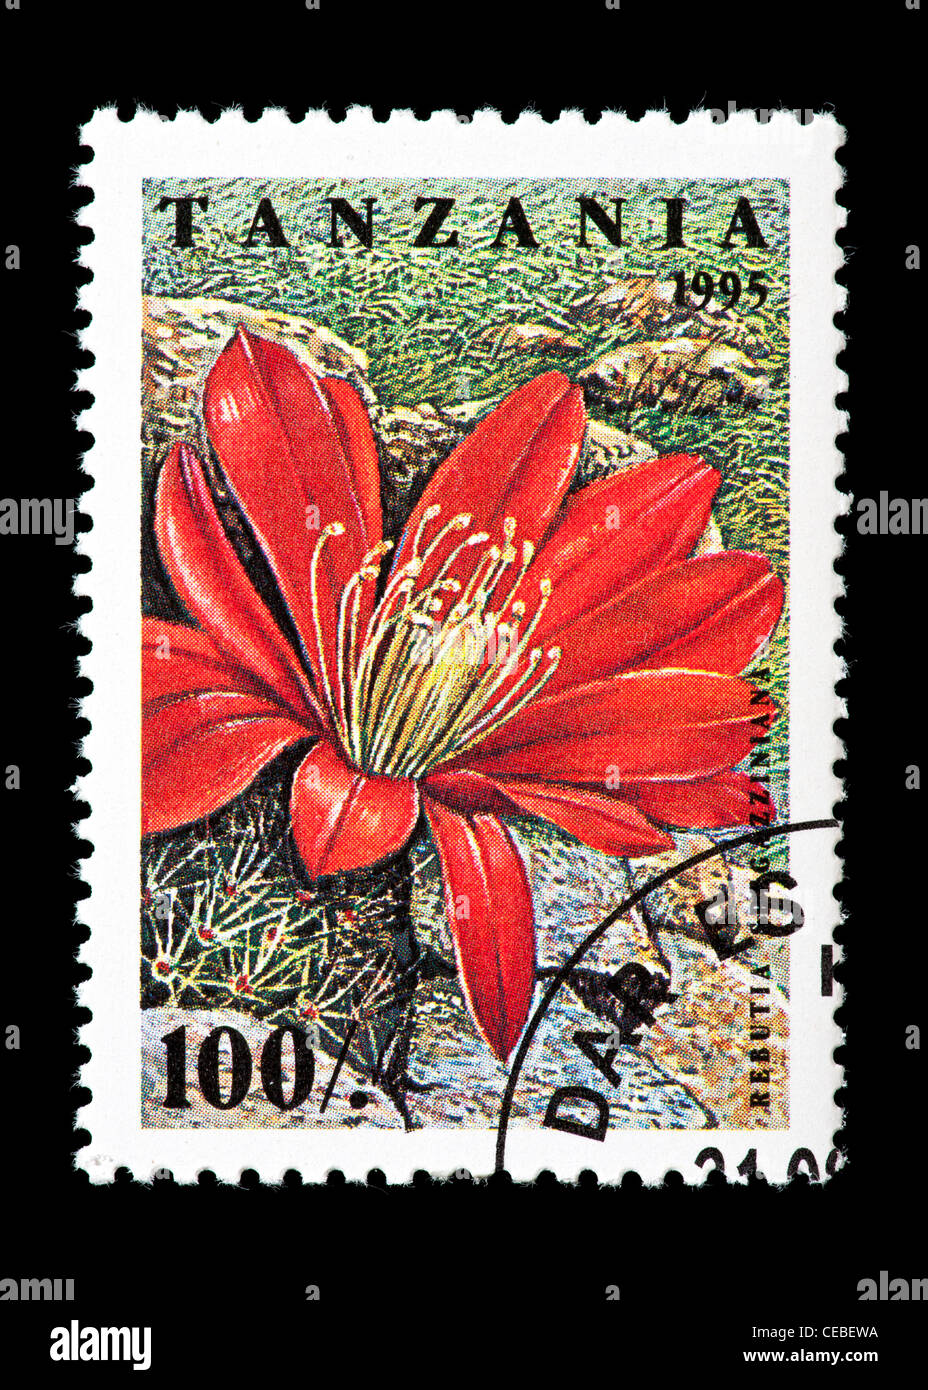 Postage stamp from Tanzania depicting a cactus flower (Rebutia spegazziniana) Stock Photo